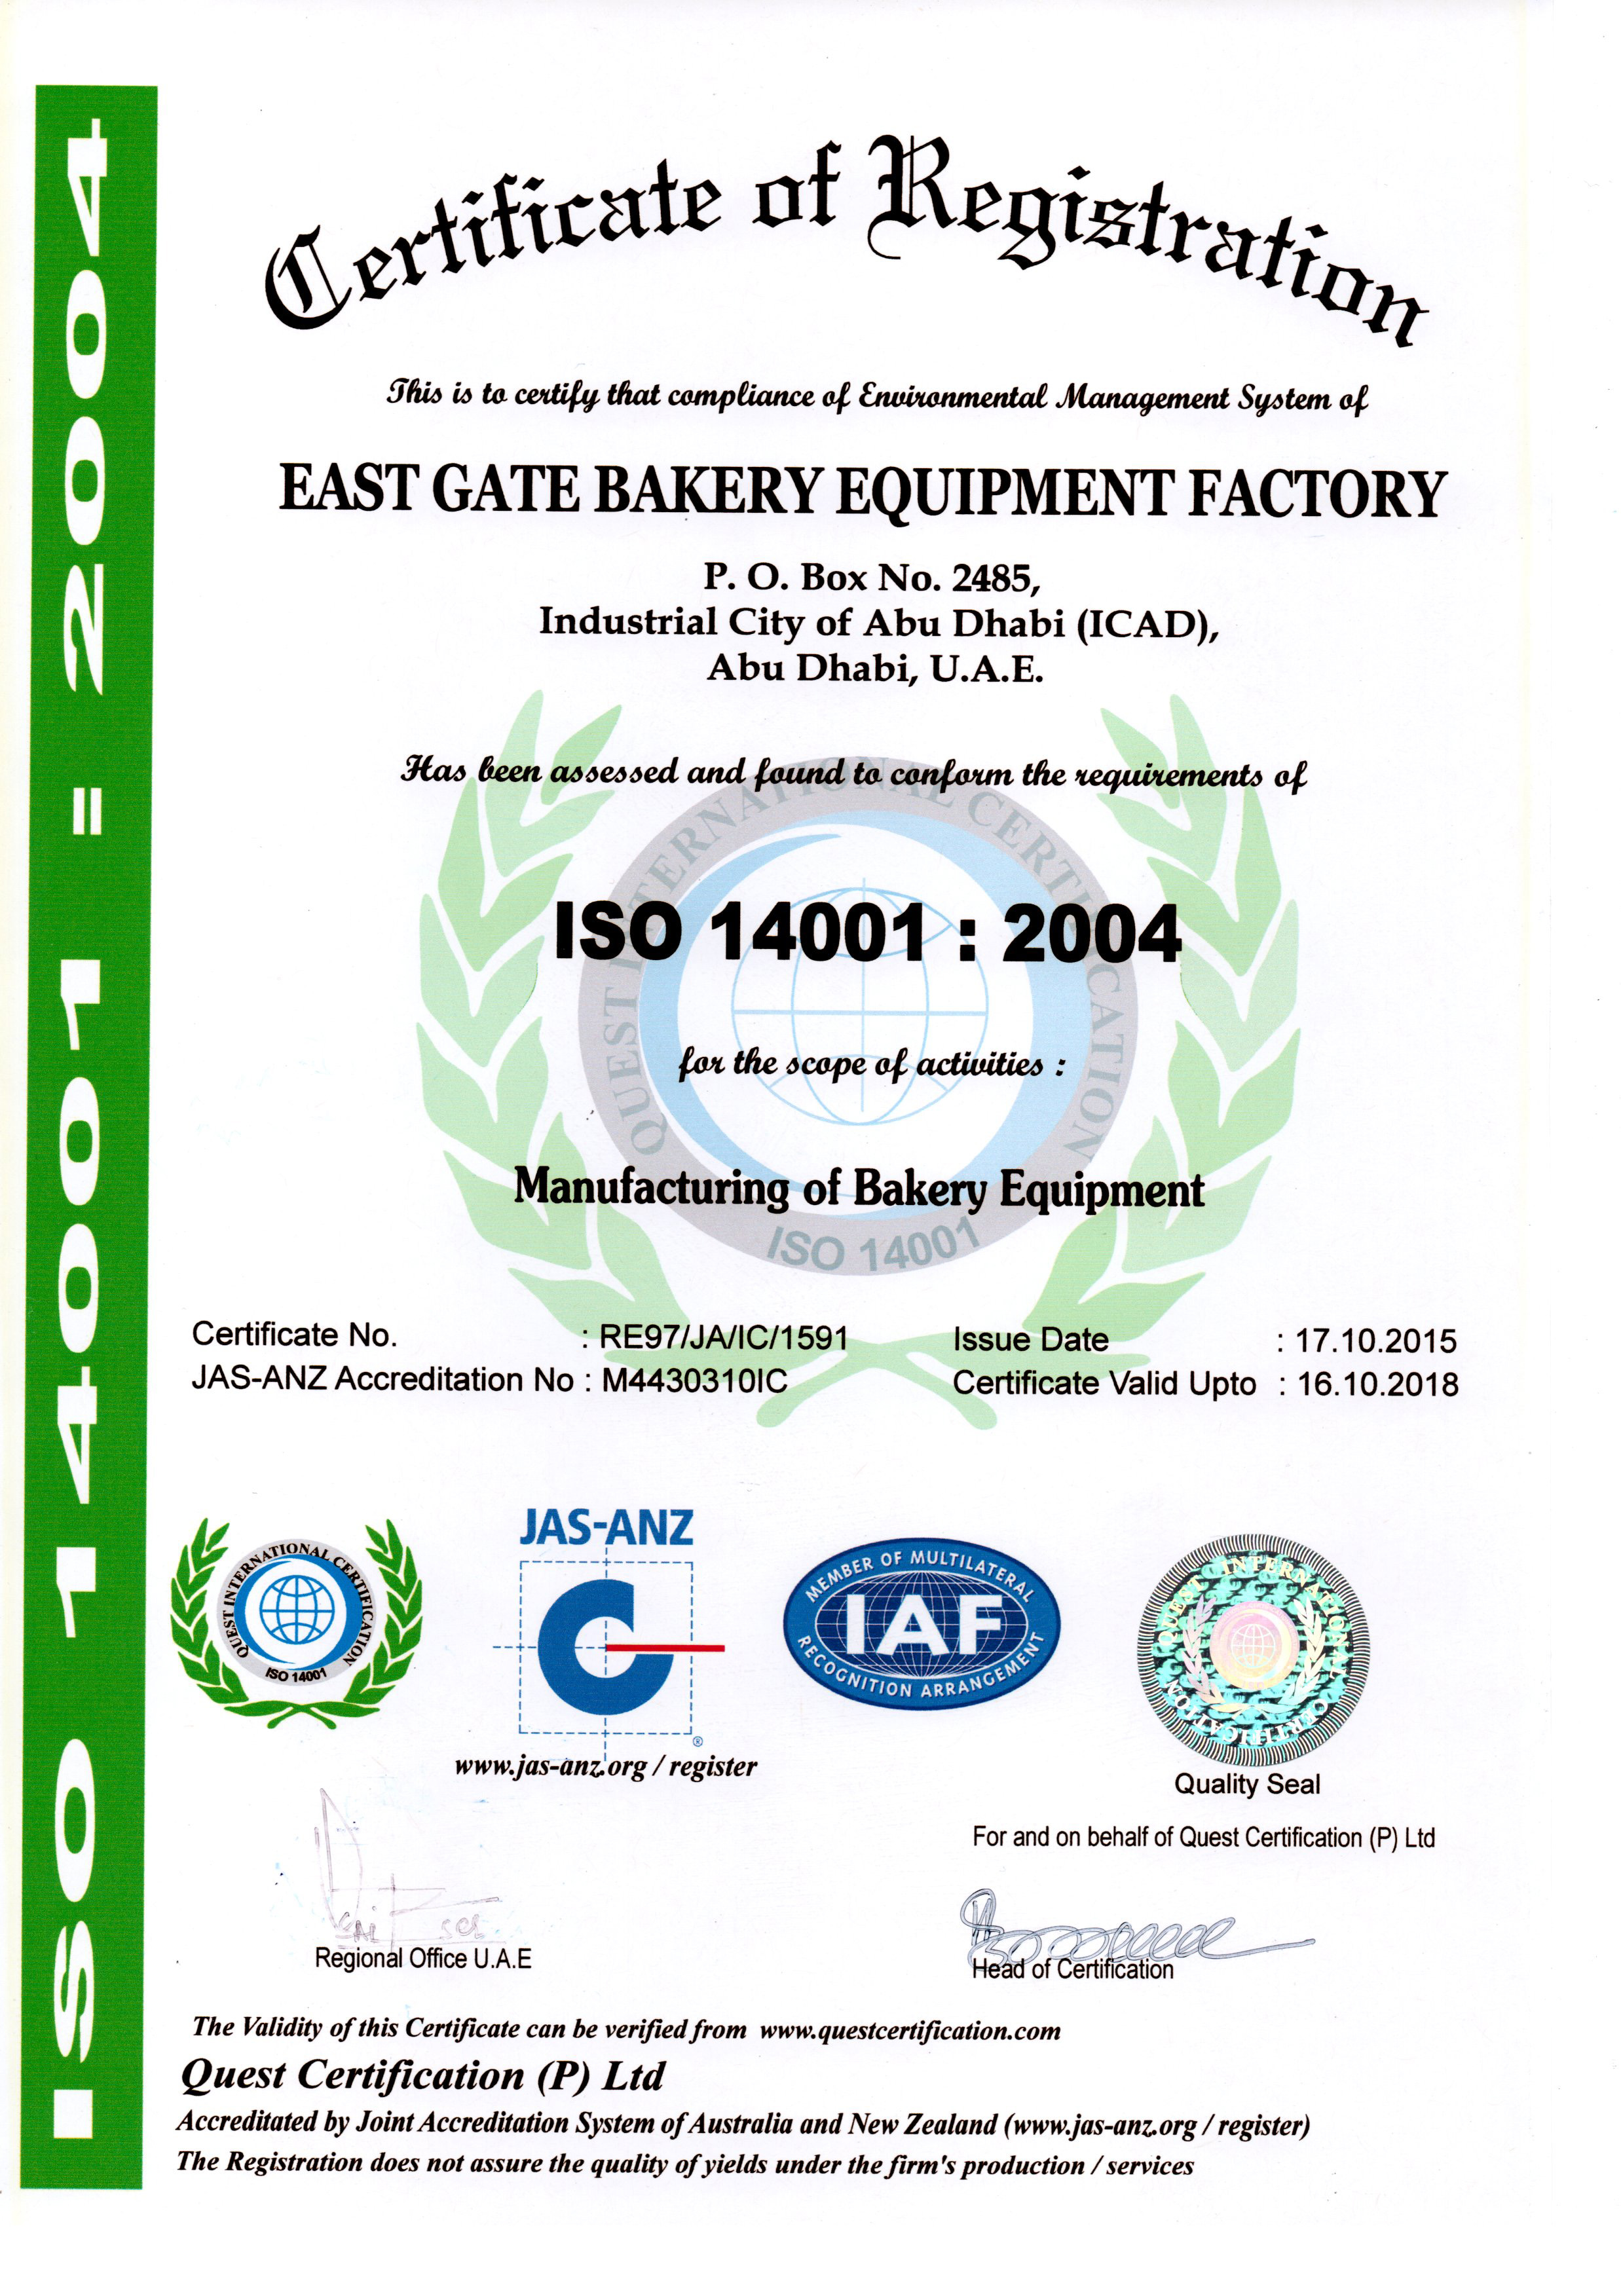 ISO 14001-2004 East Gate Bakery Equipment Factory